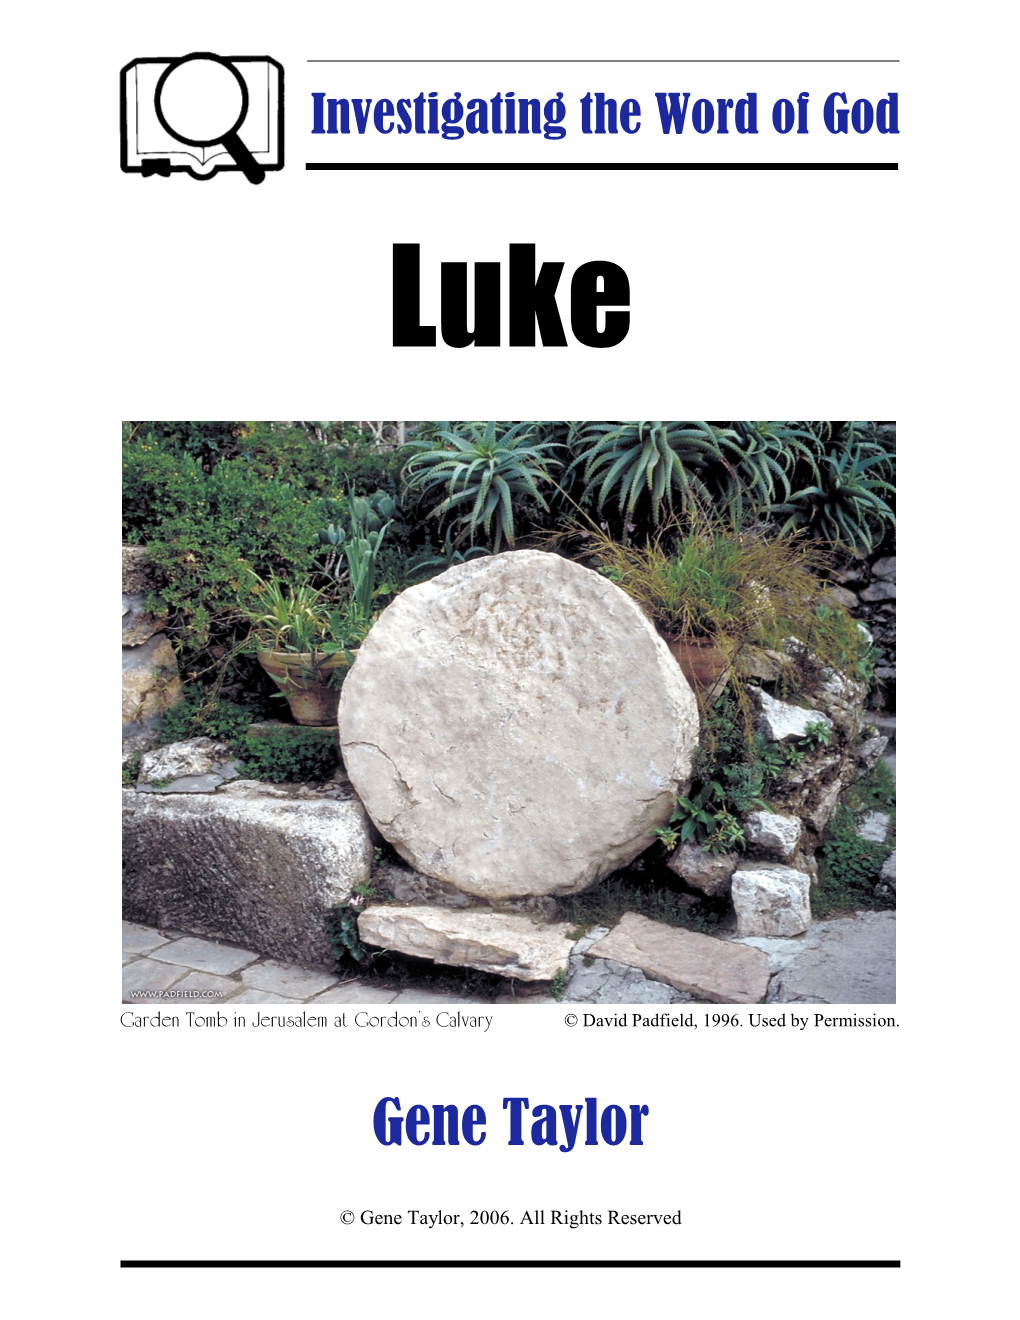 Luke, Bible Class Book